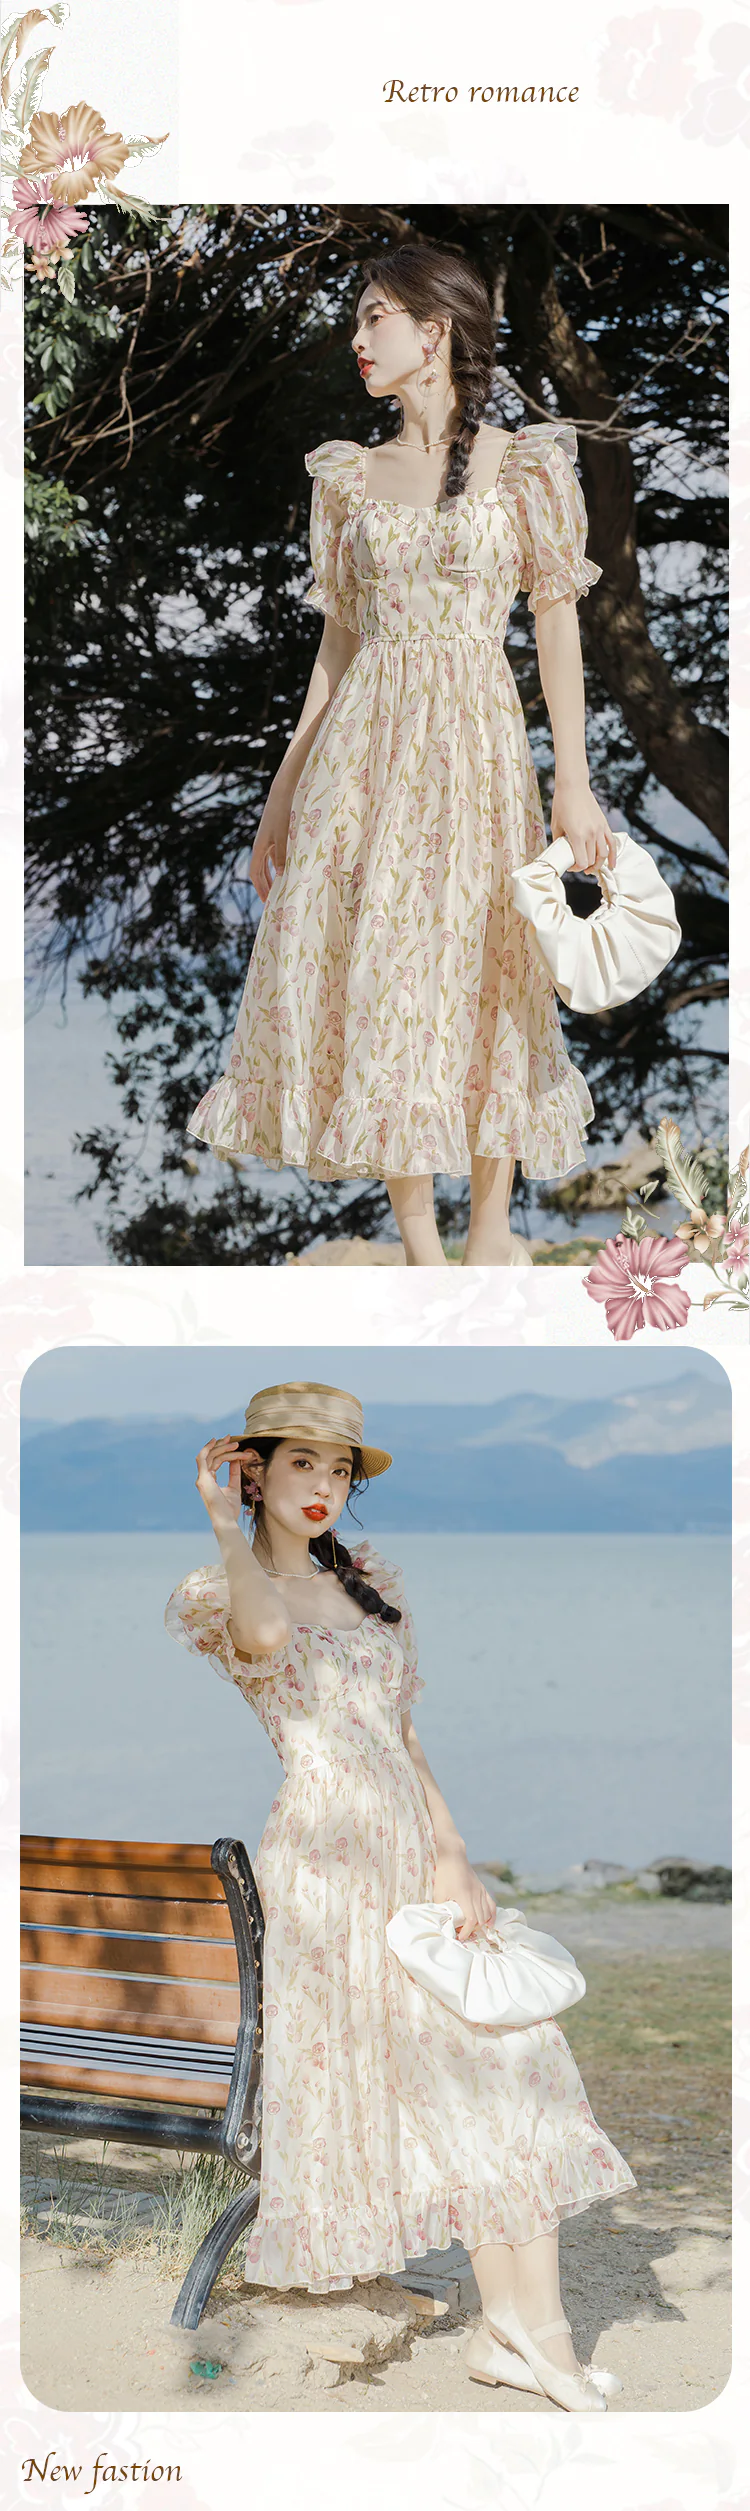 Elegant-Square-Neck-Short-Sleeve-Tulip-Floral-Printed-Casual-Dress12